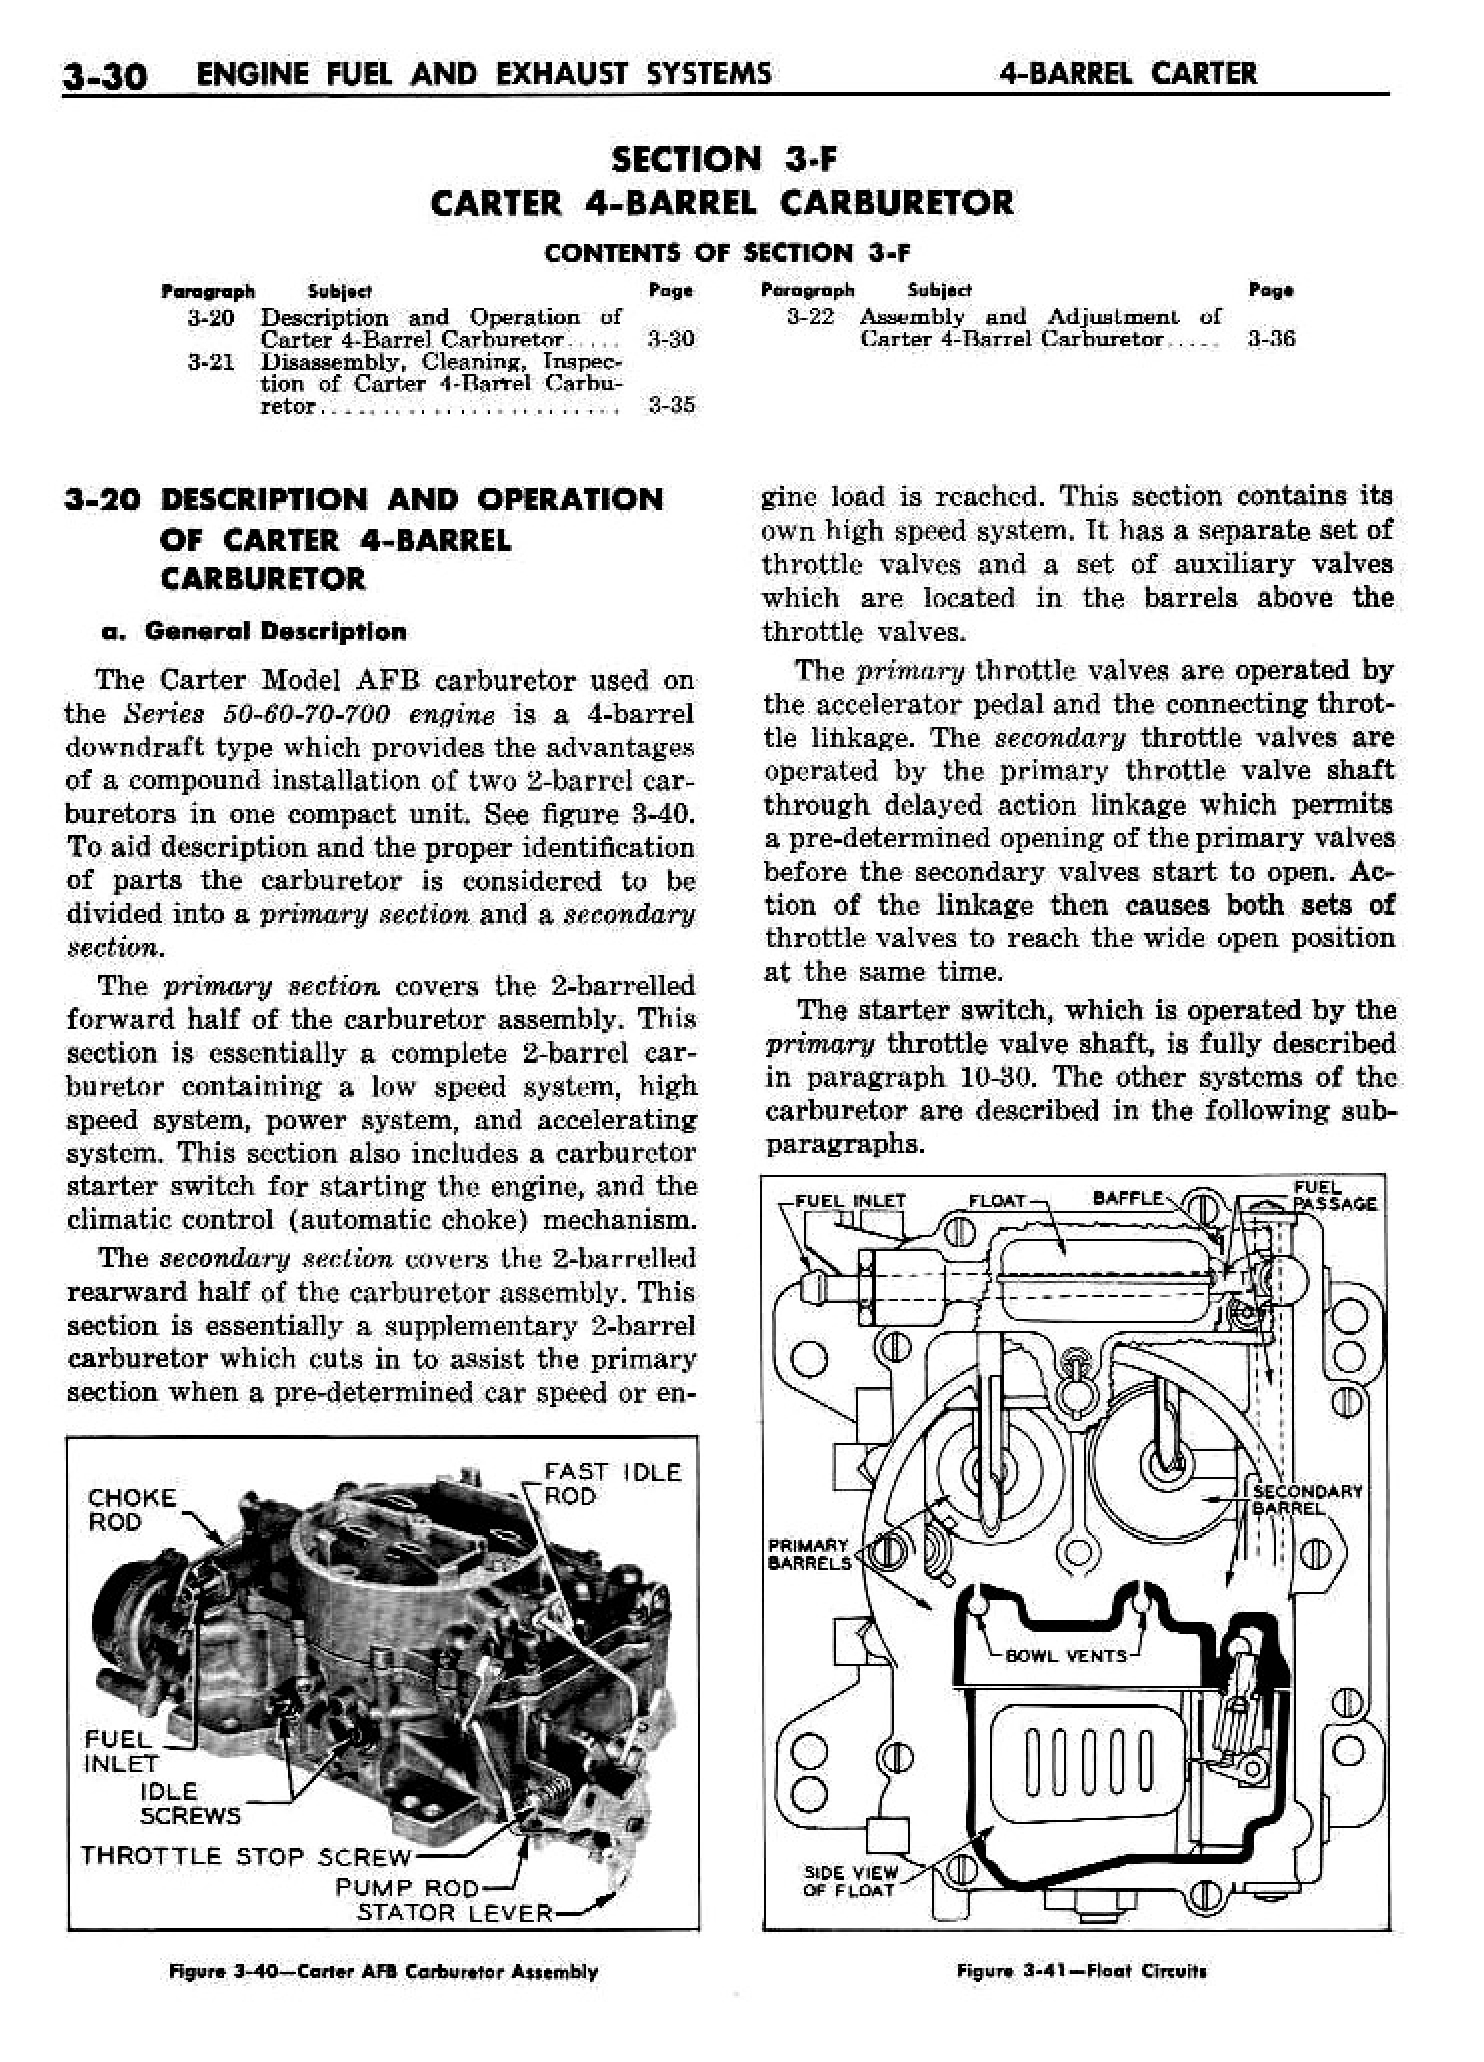 n_04 1958 Buick Shop Manual - Engine Fuel & Exhaust_30.jpg